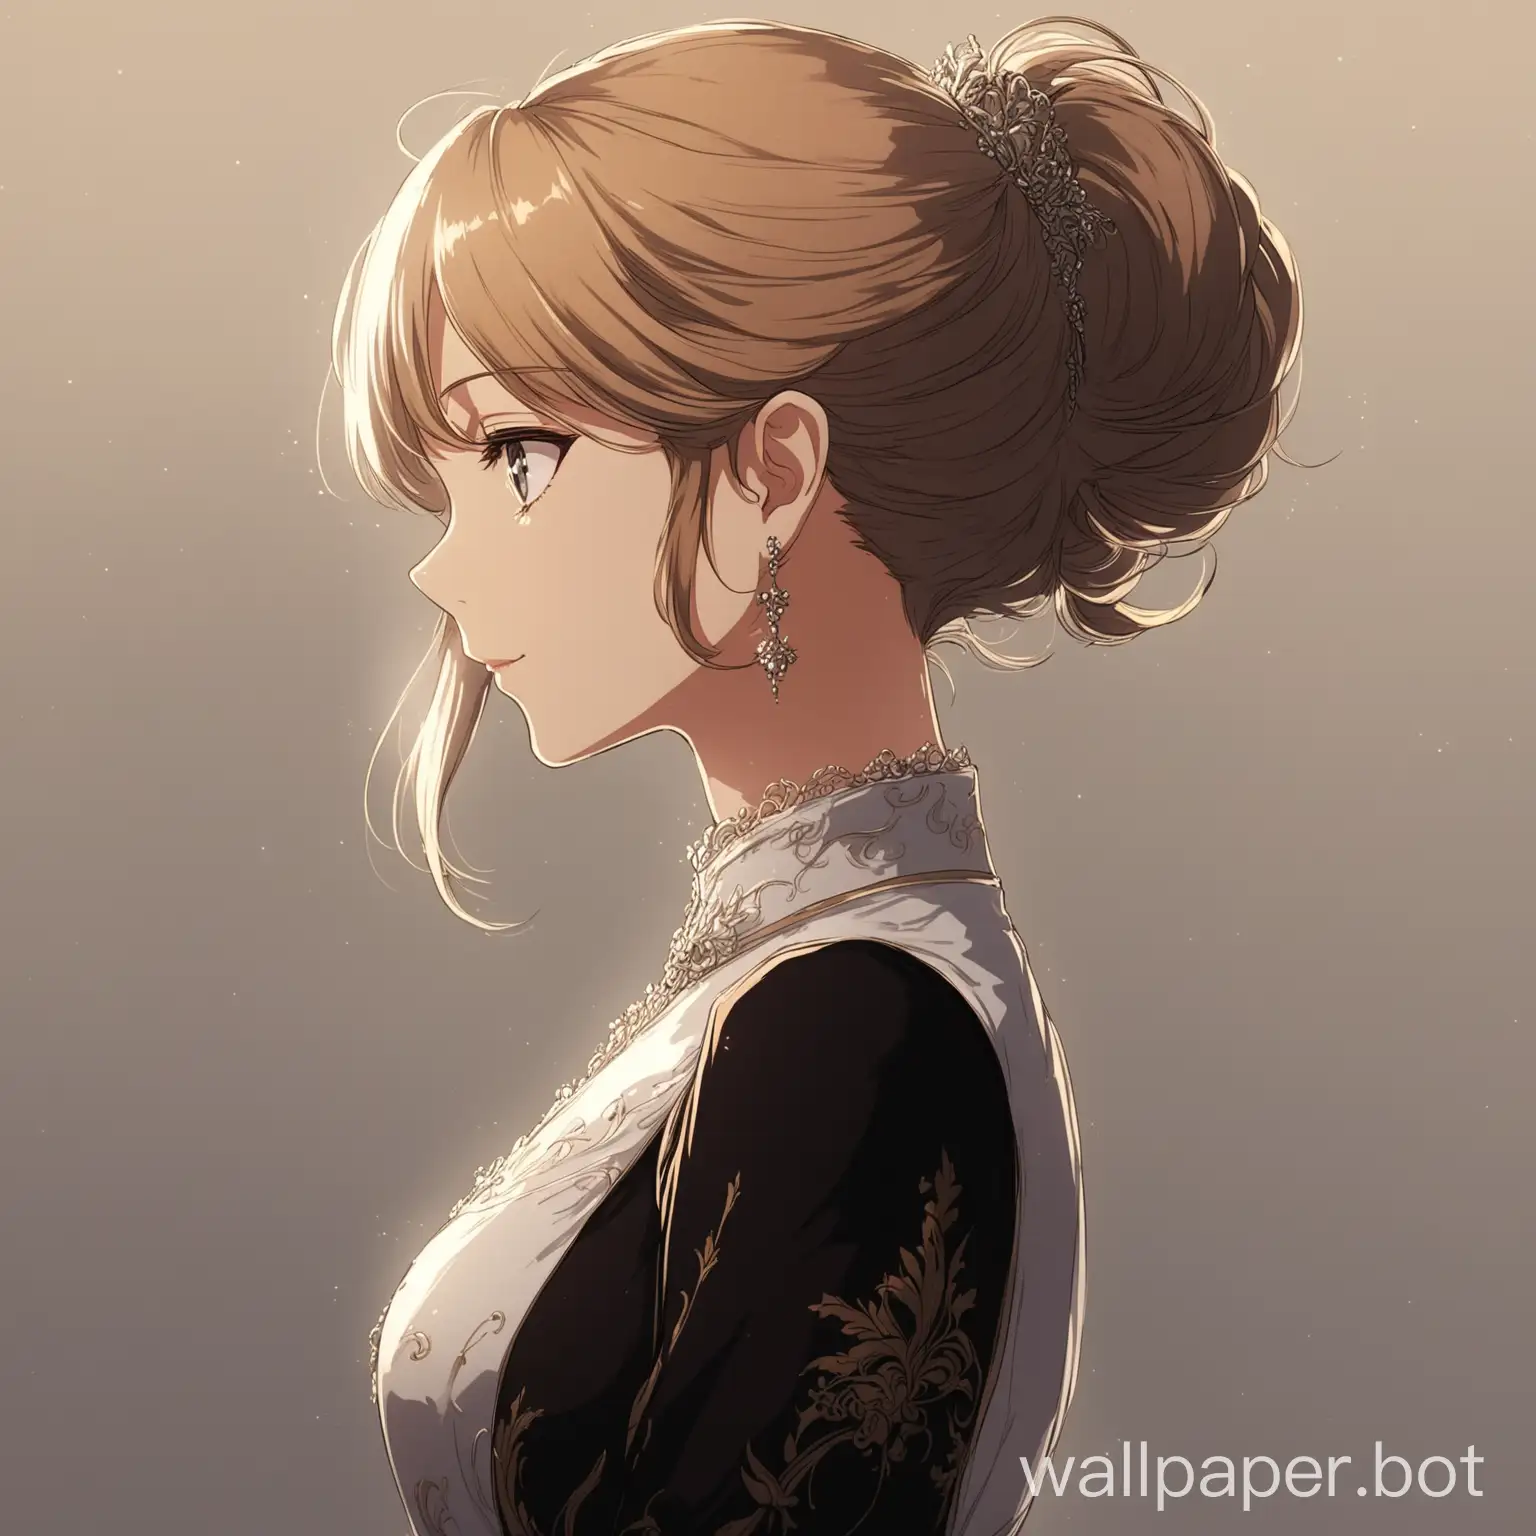 Anime-Profiles-of-an-Elegant-Girl